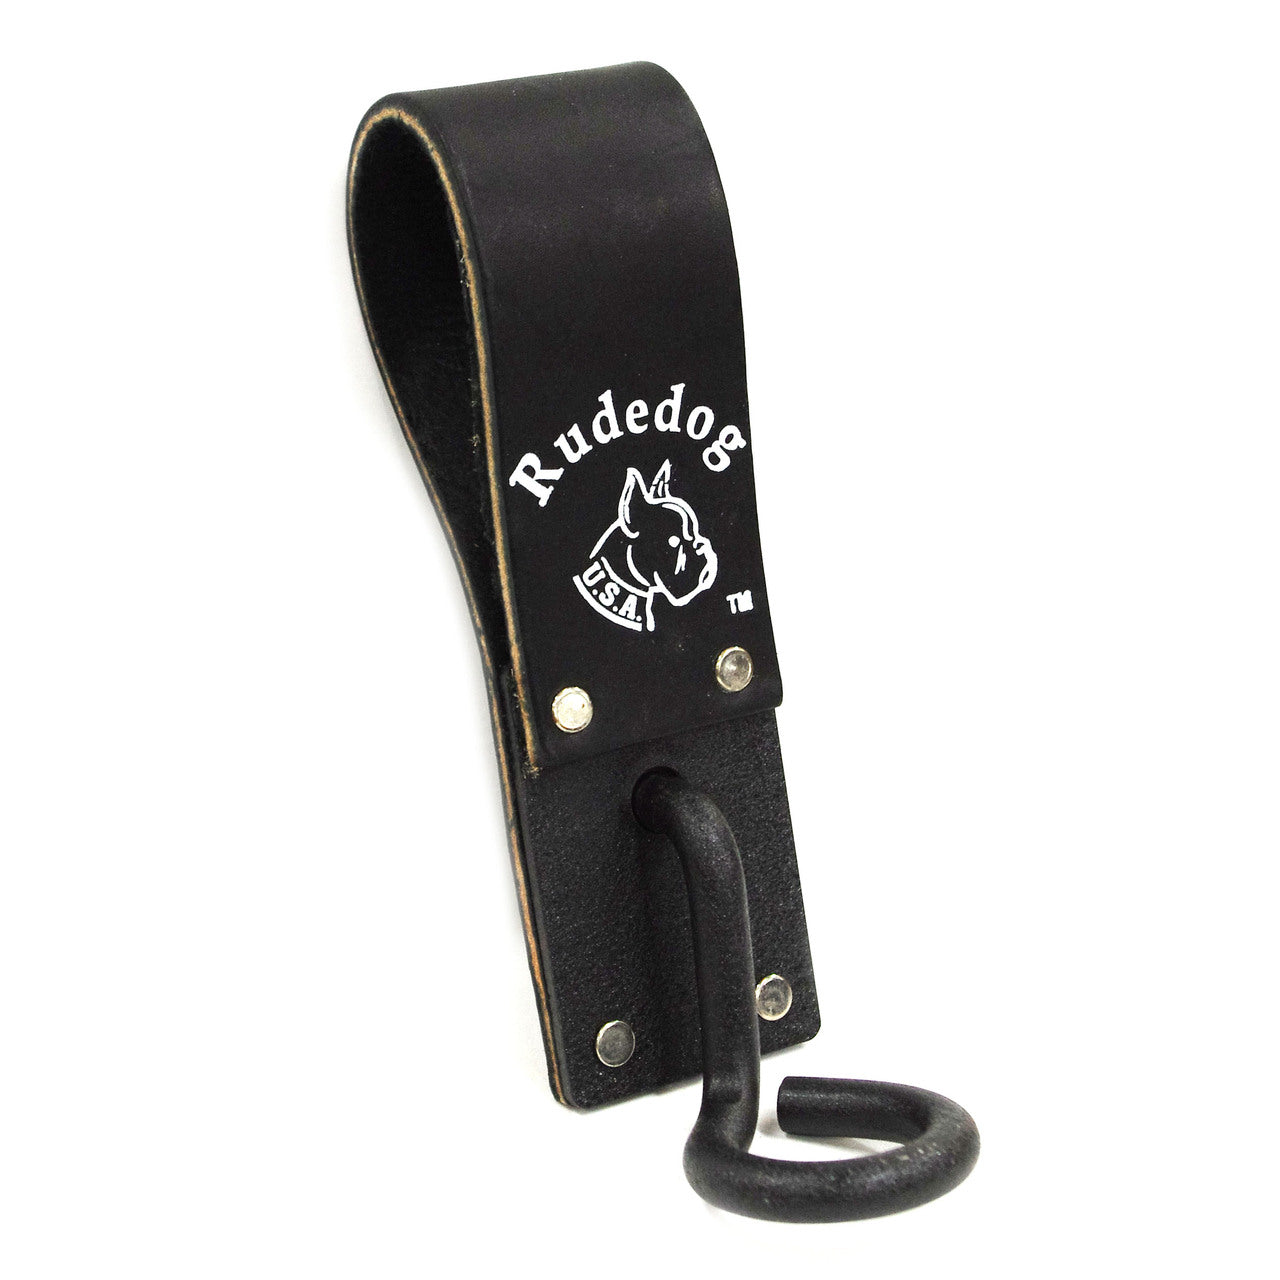 Rudedog USA 3008 Pig Tail TM Sleever Bar Holder